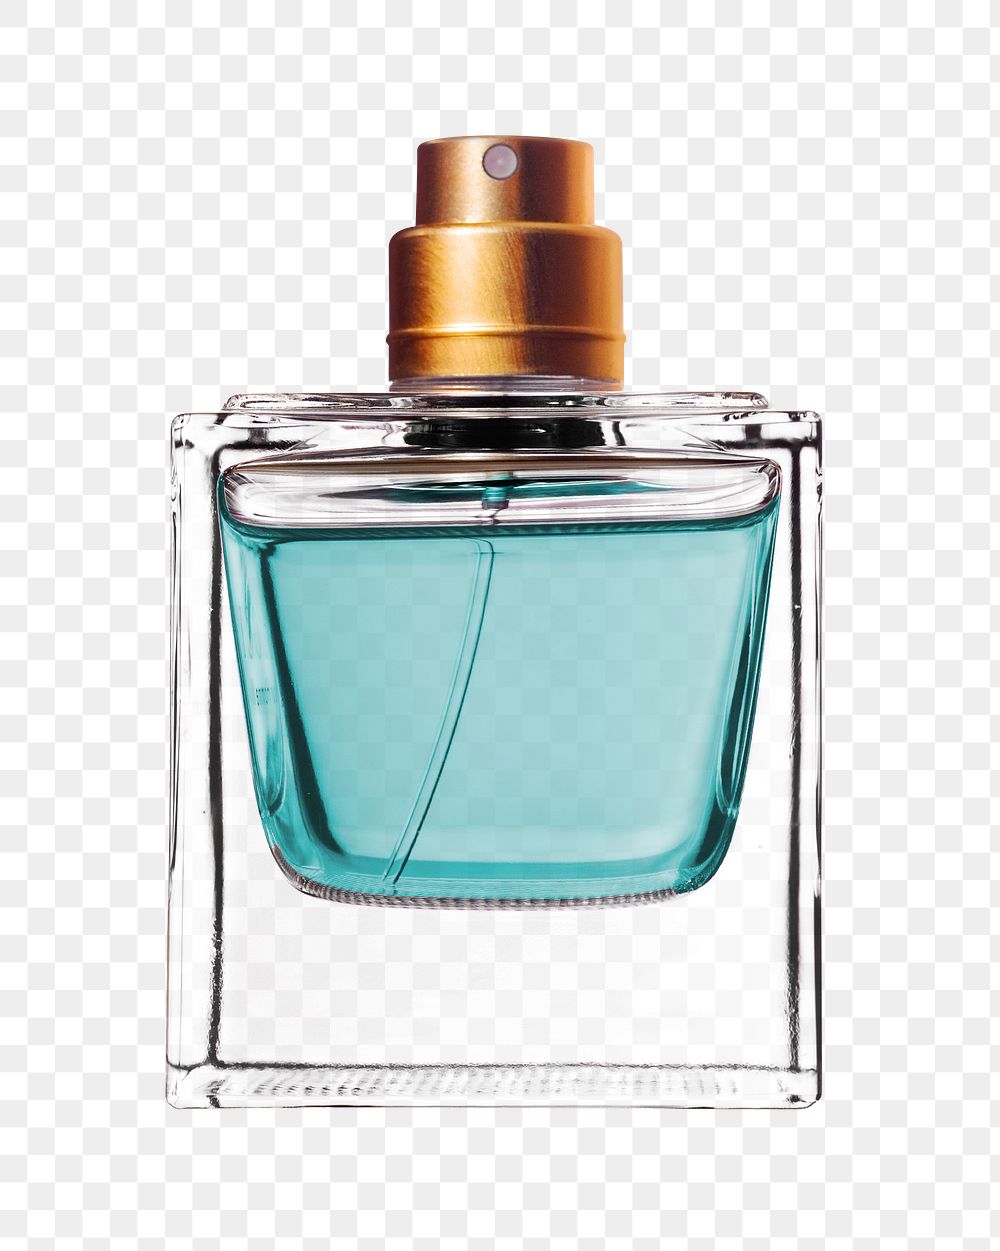 Blue perfume bottle png sticker, transparent background 